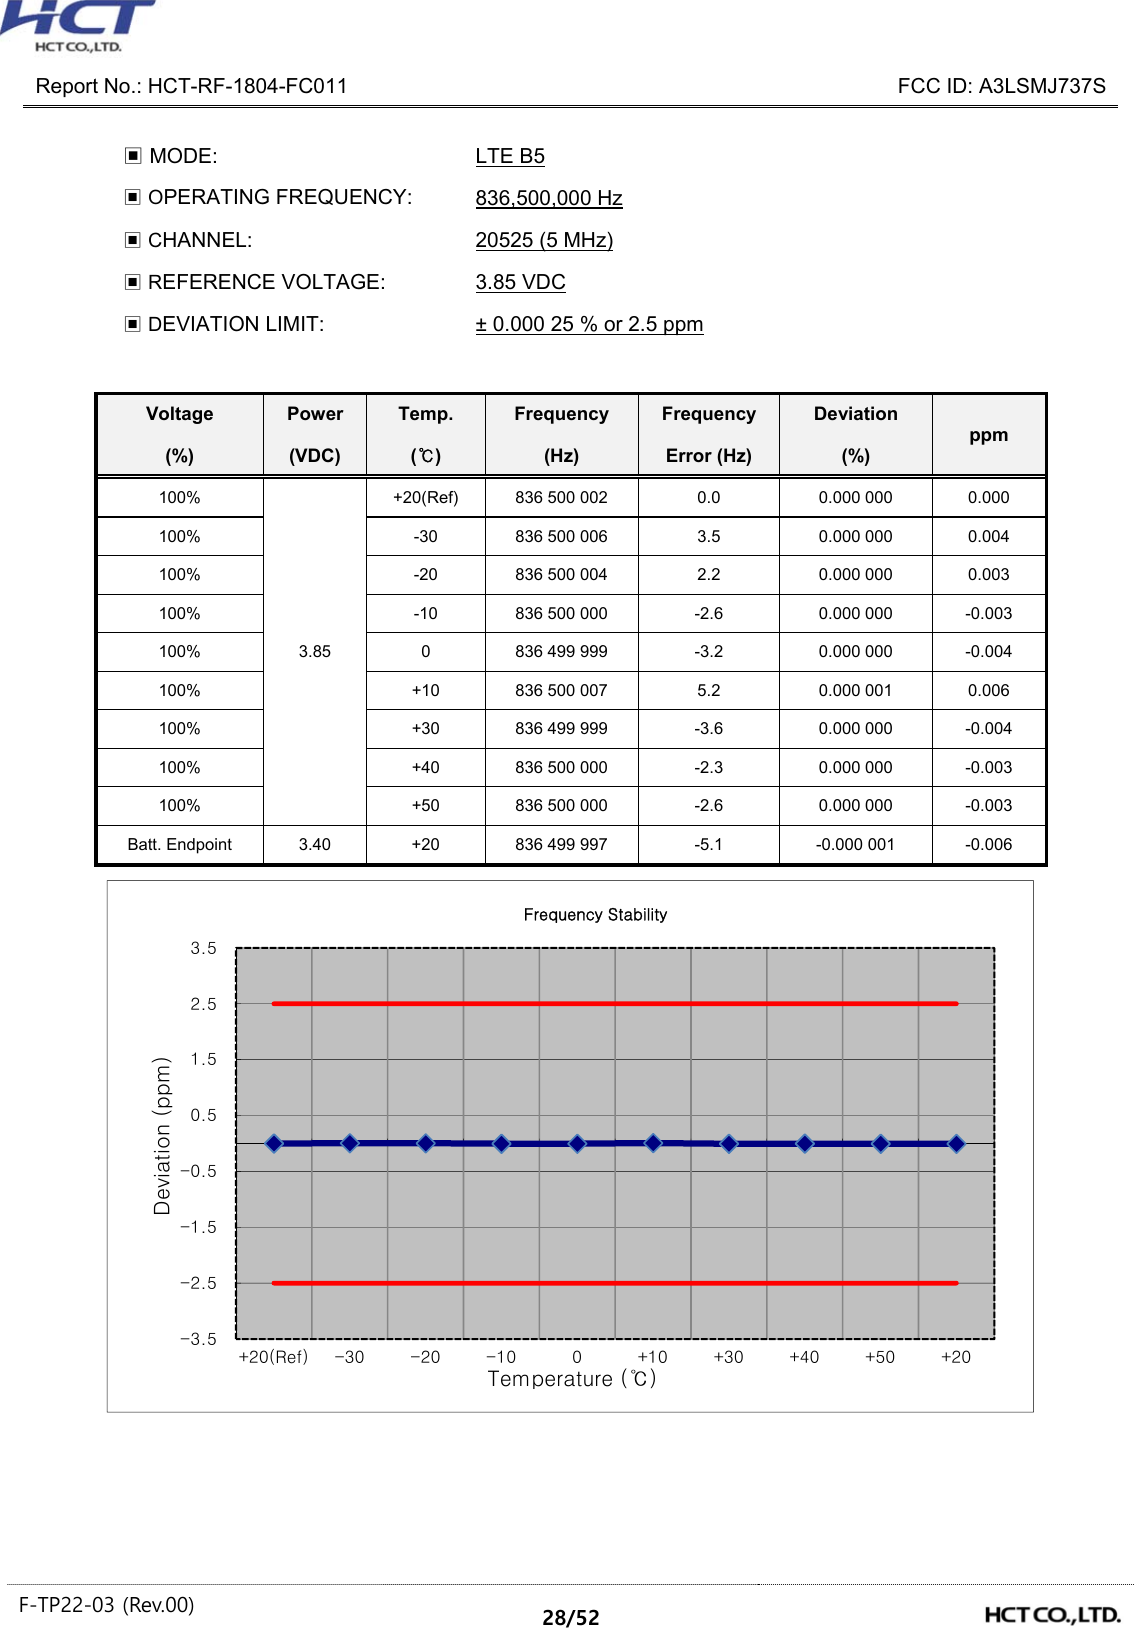  Report No.: HCT-RF-1804-FC011    FCC ID: A3LSMJ737S F-TP22-03 (Rev.00)  28/52  ▣ MODE:  LTE B5 ▣ OPERATING FREQUENCY: 836,500,000 Hz ▣ CHANNEL:    20525 (5 MHz) ▣ REFERENCE VOLTAGE: 3.85 VDC ▣ DEVIATION LIMIT: ± 0.000 25 % or 2.5 ppm        -3.5-2.5-1.5-0.50.51.52.53.5+20(Ref) -30 -20 -10 0 +10 +30 +40 +50 +20Deviation (ppm)Temperature (℃)Frequency StabilityVoltage    Power  Temp.  Frequency  Frequency  Deviation ppm (%)  (VDC)  (℃)  (Hz)  Error (Hz)  (%) 100% 3.85 +20(Ref)  836 500 002  0.0    0.000 000  0.000   100% -30 836 500 006  3.5    0.000 000  0.004   100% -20 836 500 004  2.2    0.000 000  0.003   100% -10 836 500 000  -2.6    0.000 000  -0.003   100% 0 836 499 999  -3.2    0.000 000  -0.004   100% +10 836 500 007  5.2    0.000 001  0.006   100% +30 836 499 999  -3.6    0.000 000  -0.004   100% +40 836 500 000  -2.3    0.000 000  -0.003   100% +50 836 500 000  -2.6    0.000 000  -0.003   Batt. Endpoint  3.40  +20  836 499 997  -5.1    -0.000 001  -0.006   